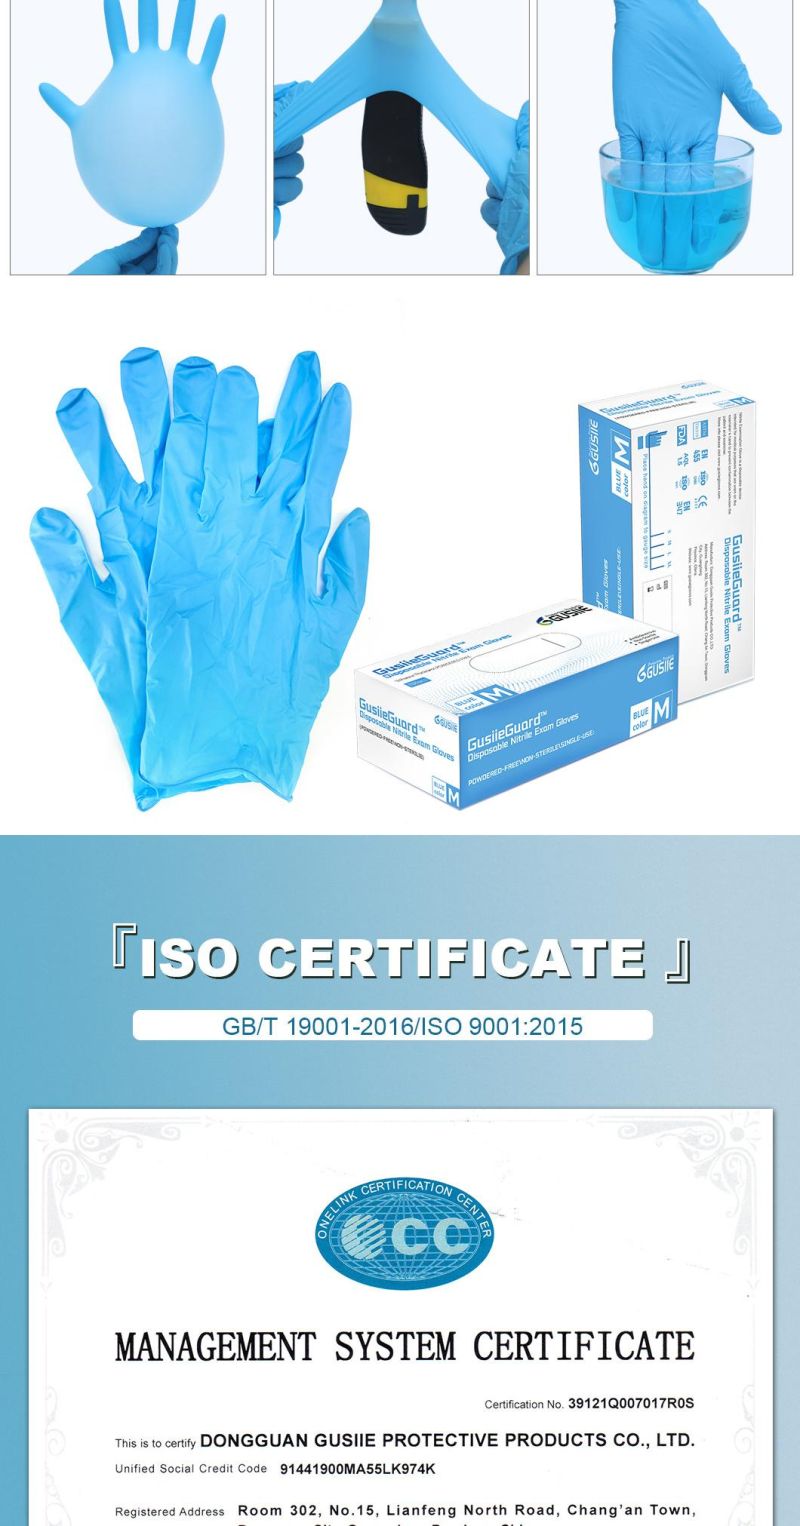 Gusiie Medical Supplies Wholesale Powder Free Disposable Examination Gloves